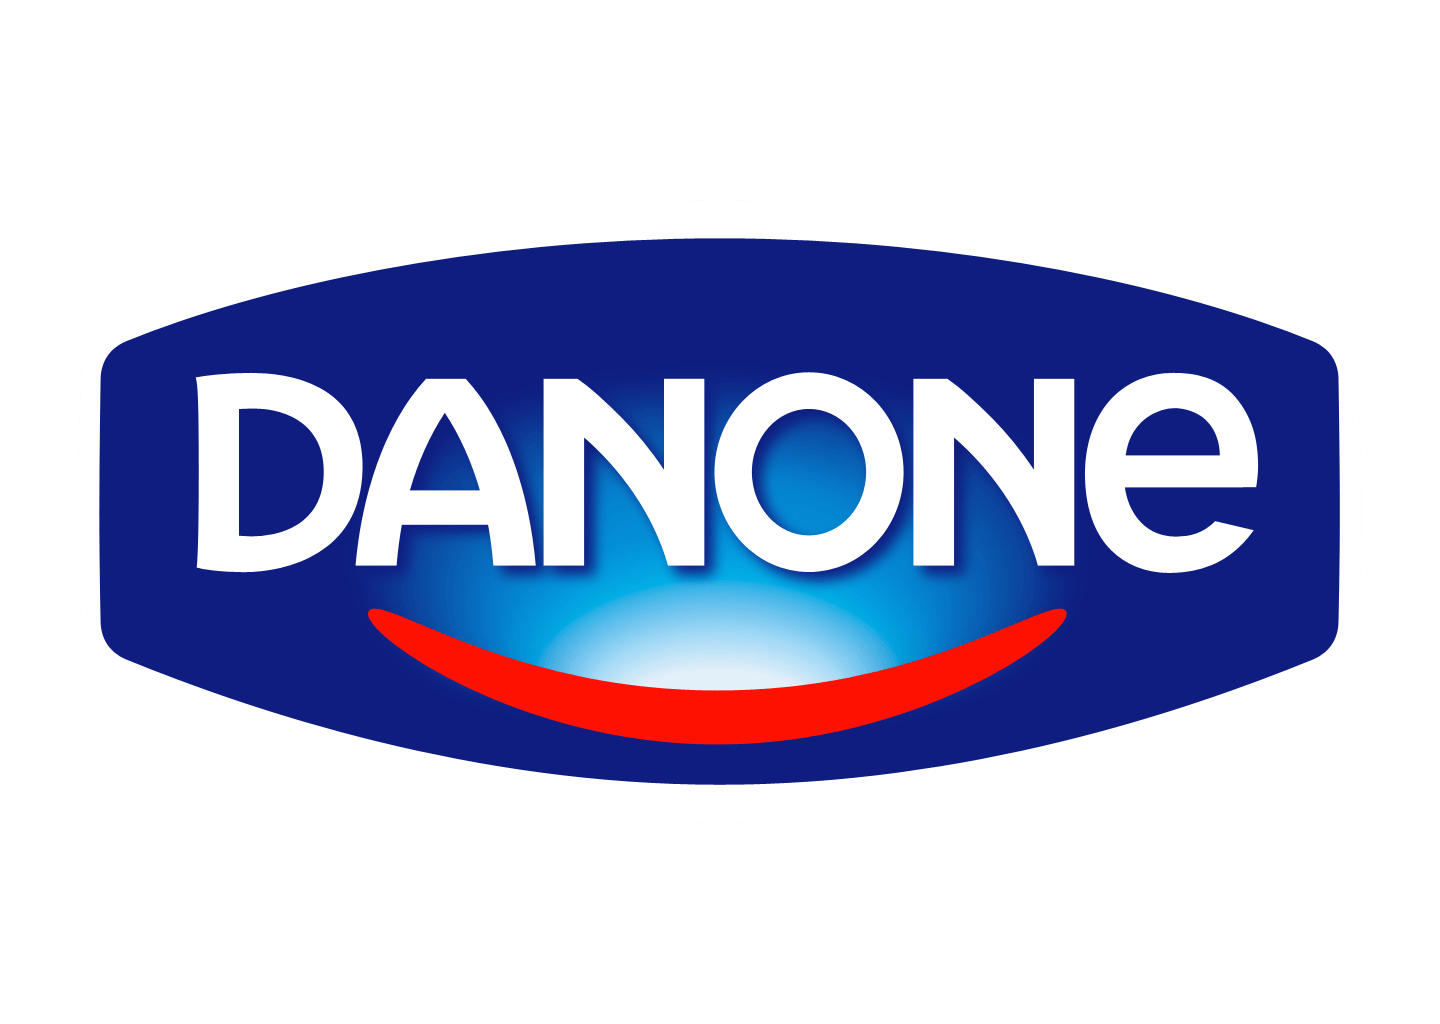 Danone-brand-logo